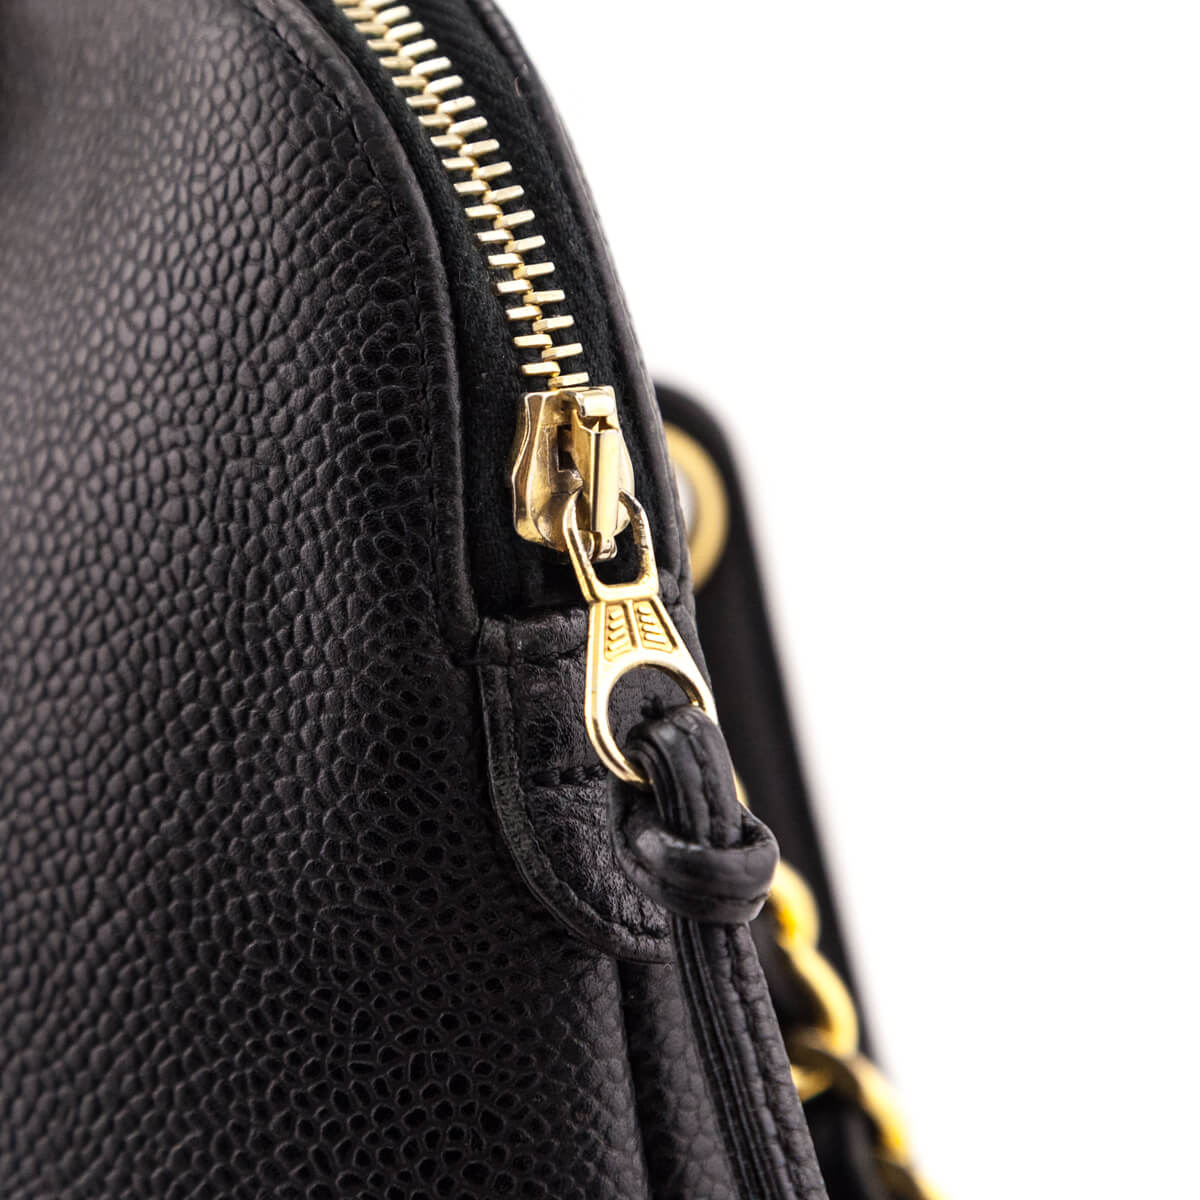 Chanel Black Caviar Vintage CC Shoulder Bag - Love that Bag etc - Preowned Authentic Designer Handbags & Preloved Fashions